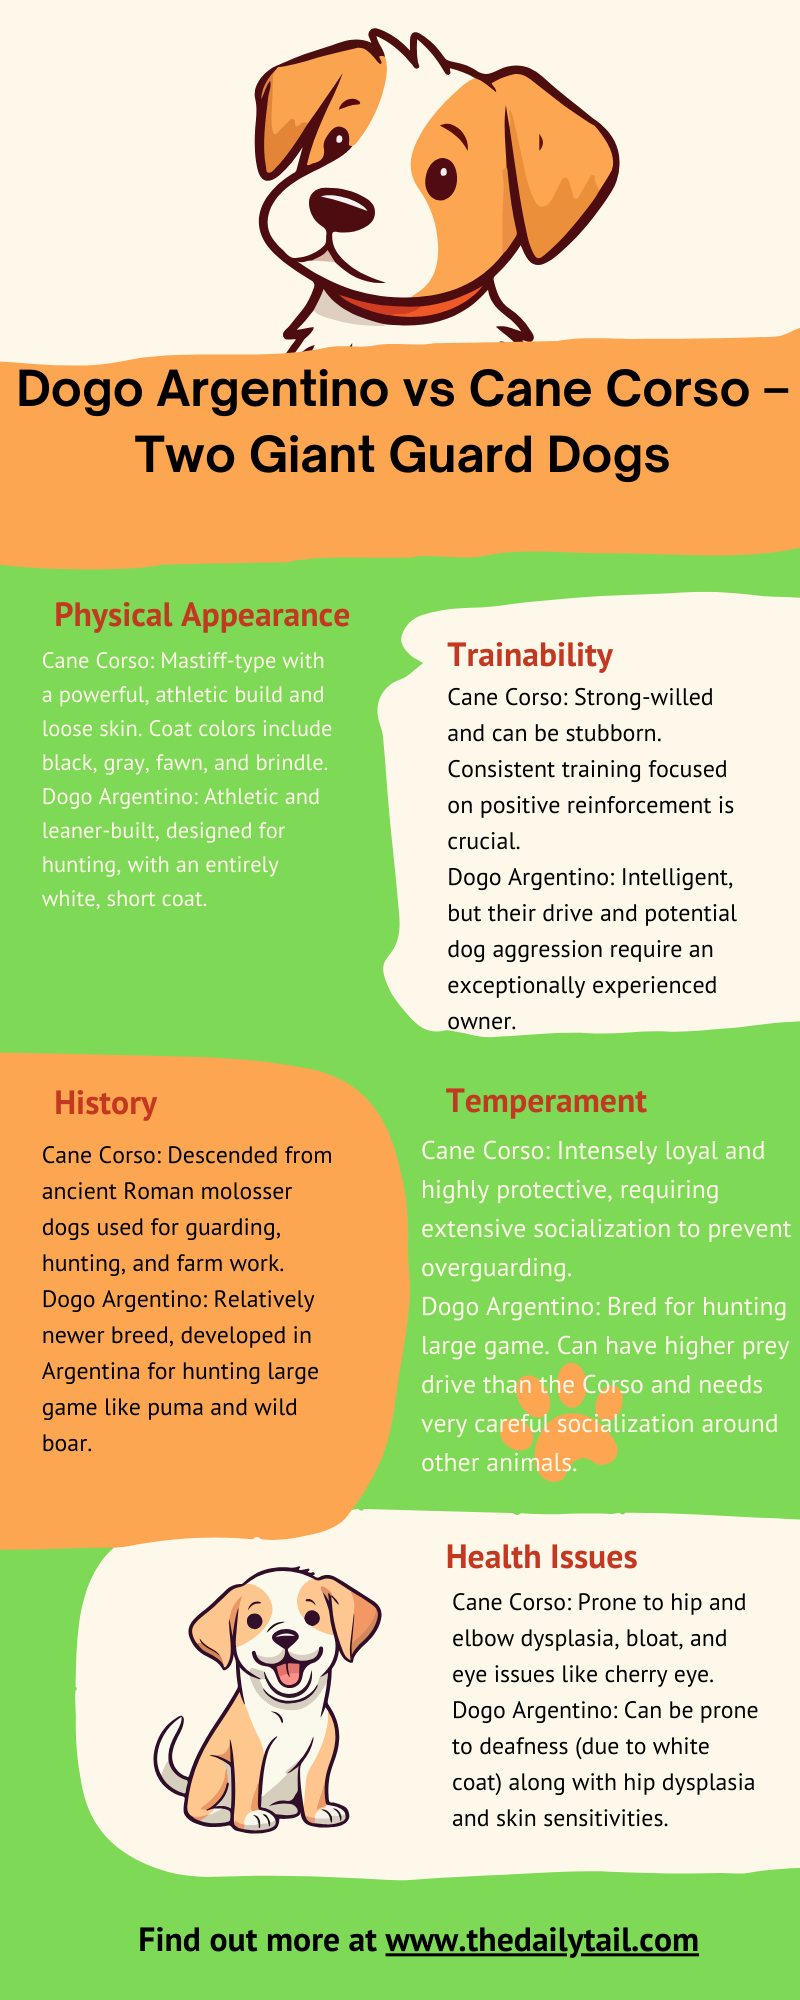 cane corso vs dogo argentino infographic